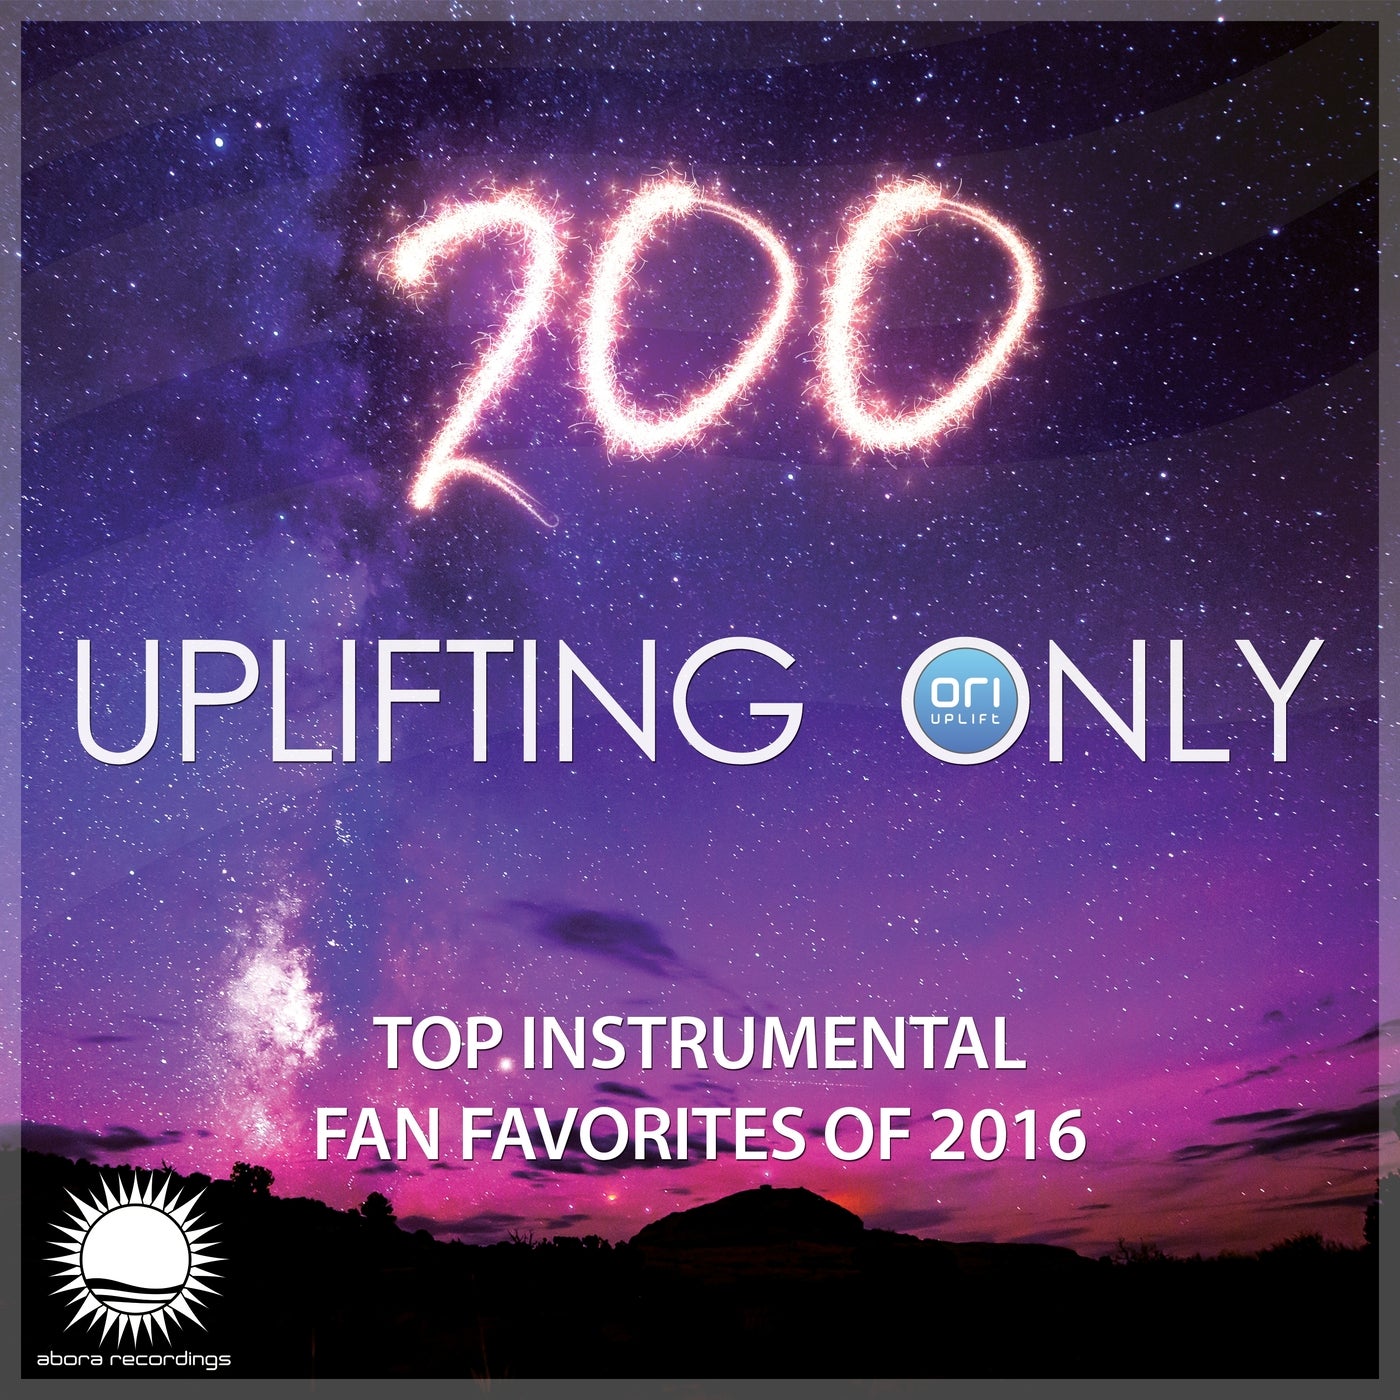 Uplifting Only Episode 200 (Top Instrumental Fan Favorites 2016)